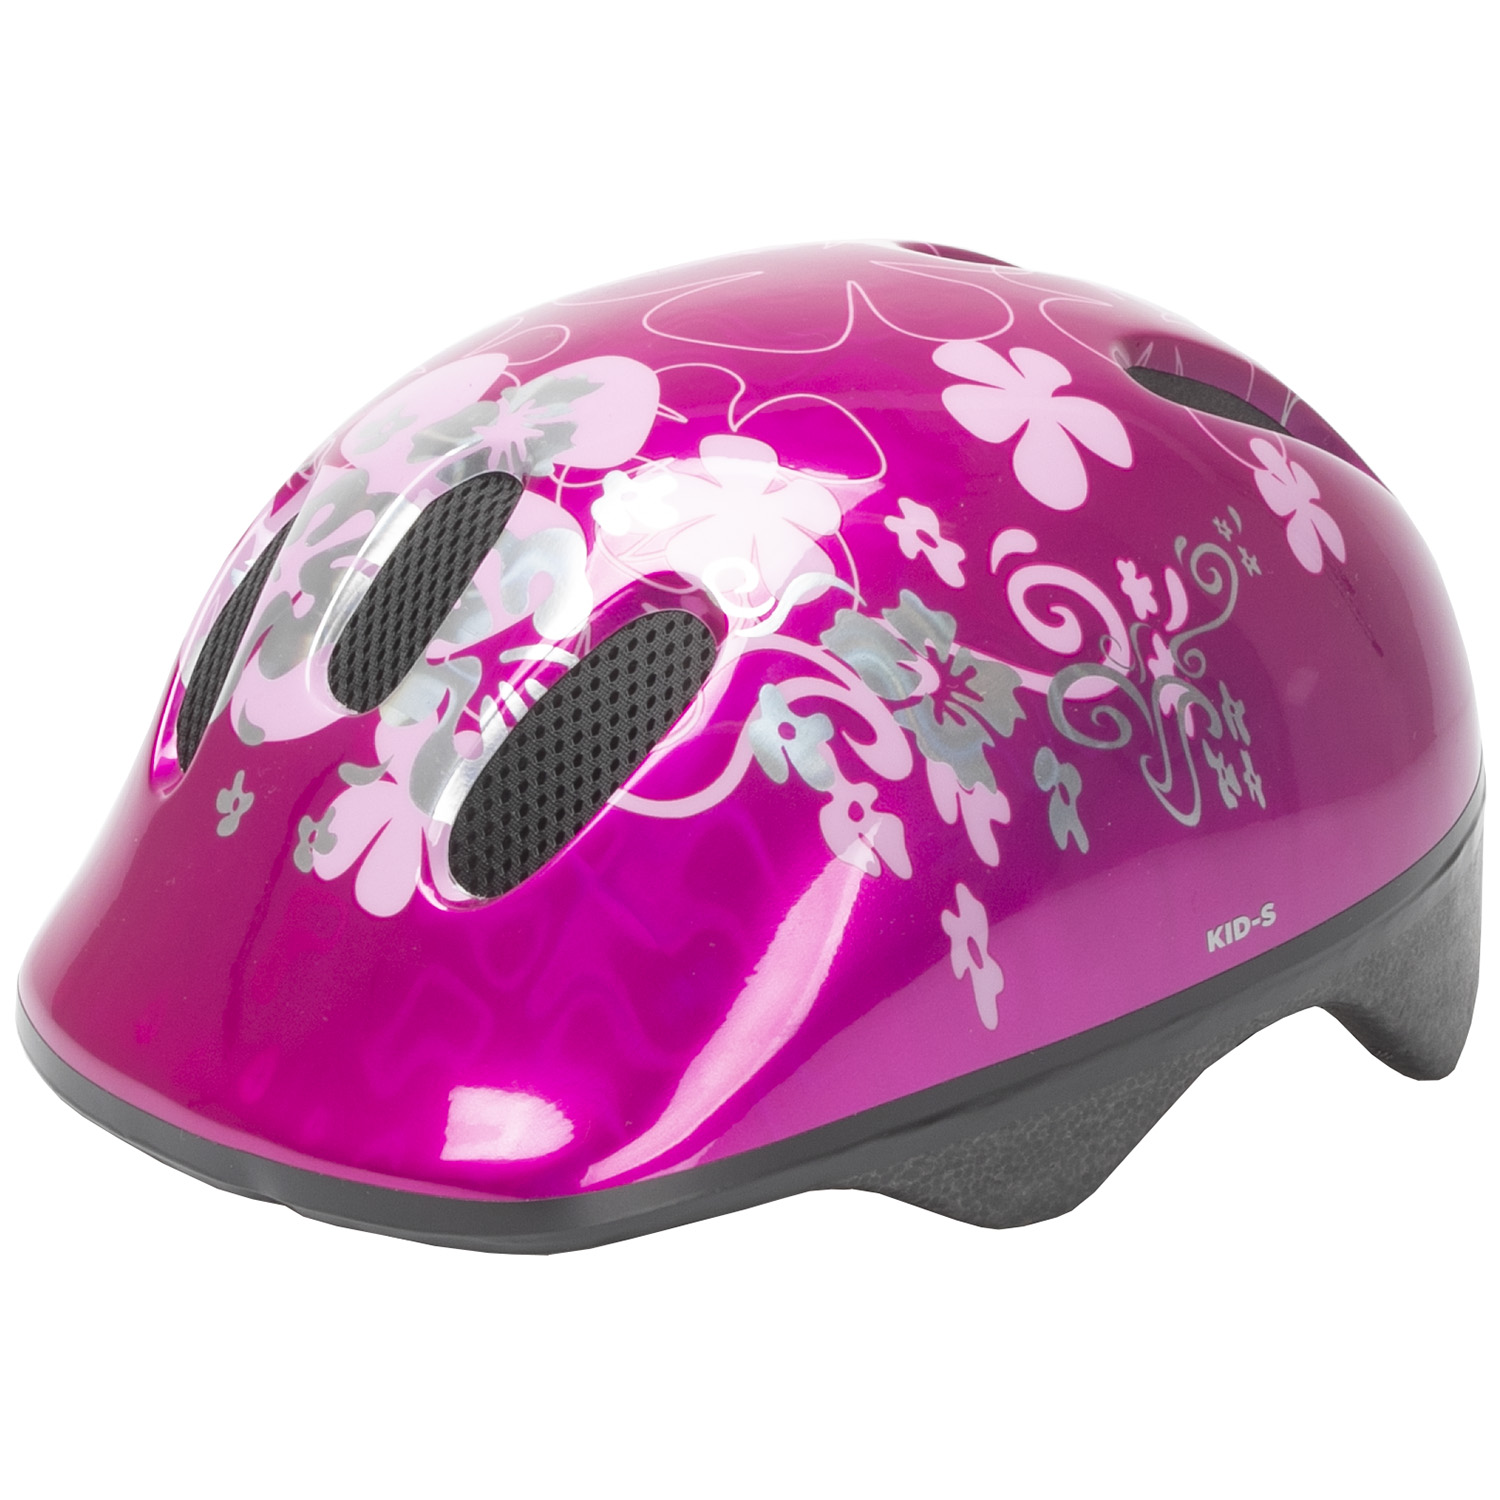 731001 – M-WAVE KID-S Flower children helmet – AVAILABLE IN SELECTED BIKE SHOPS